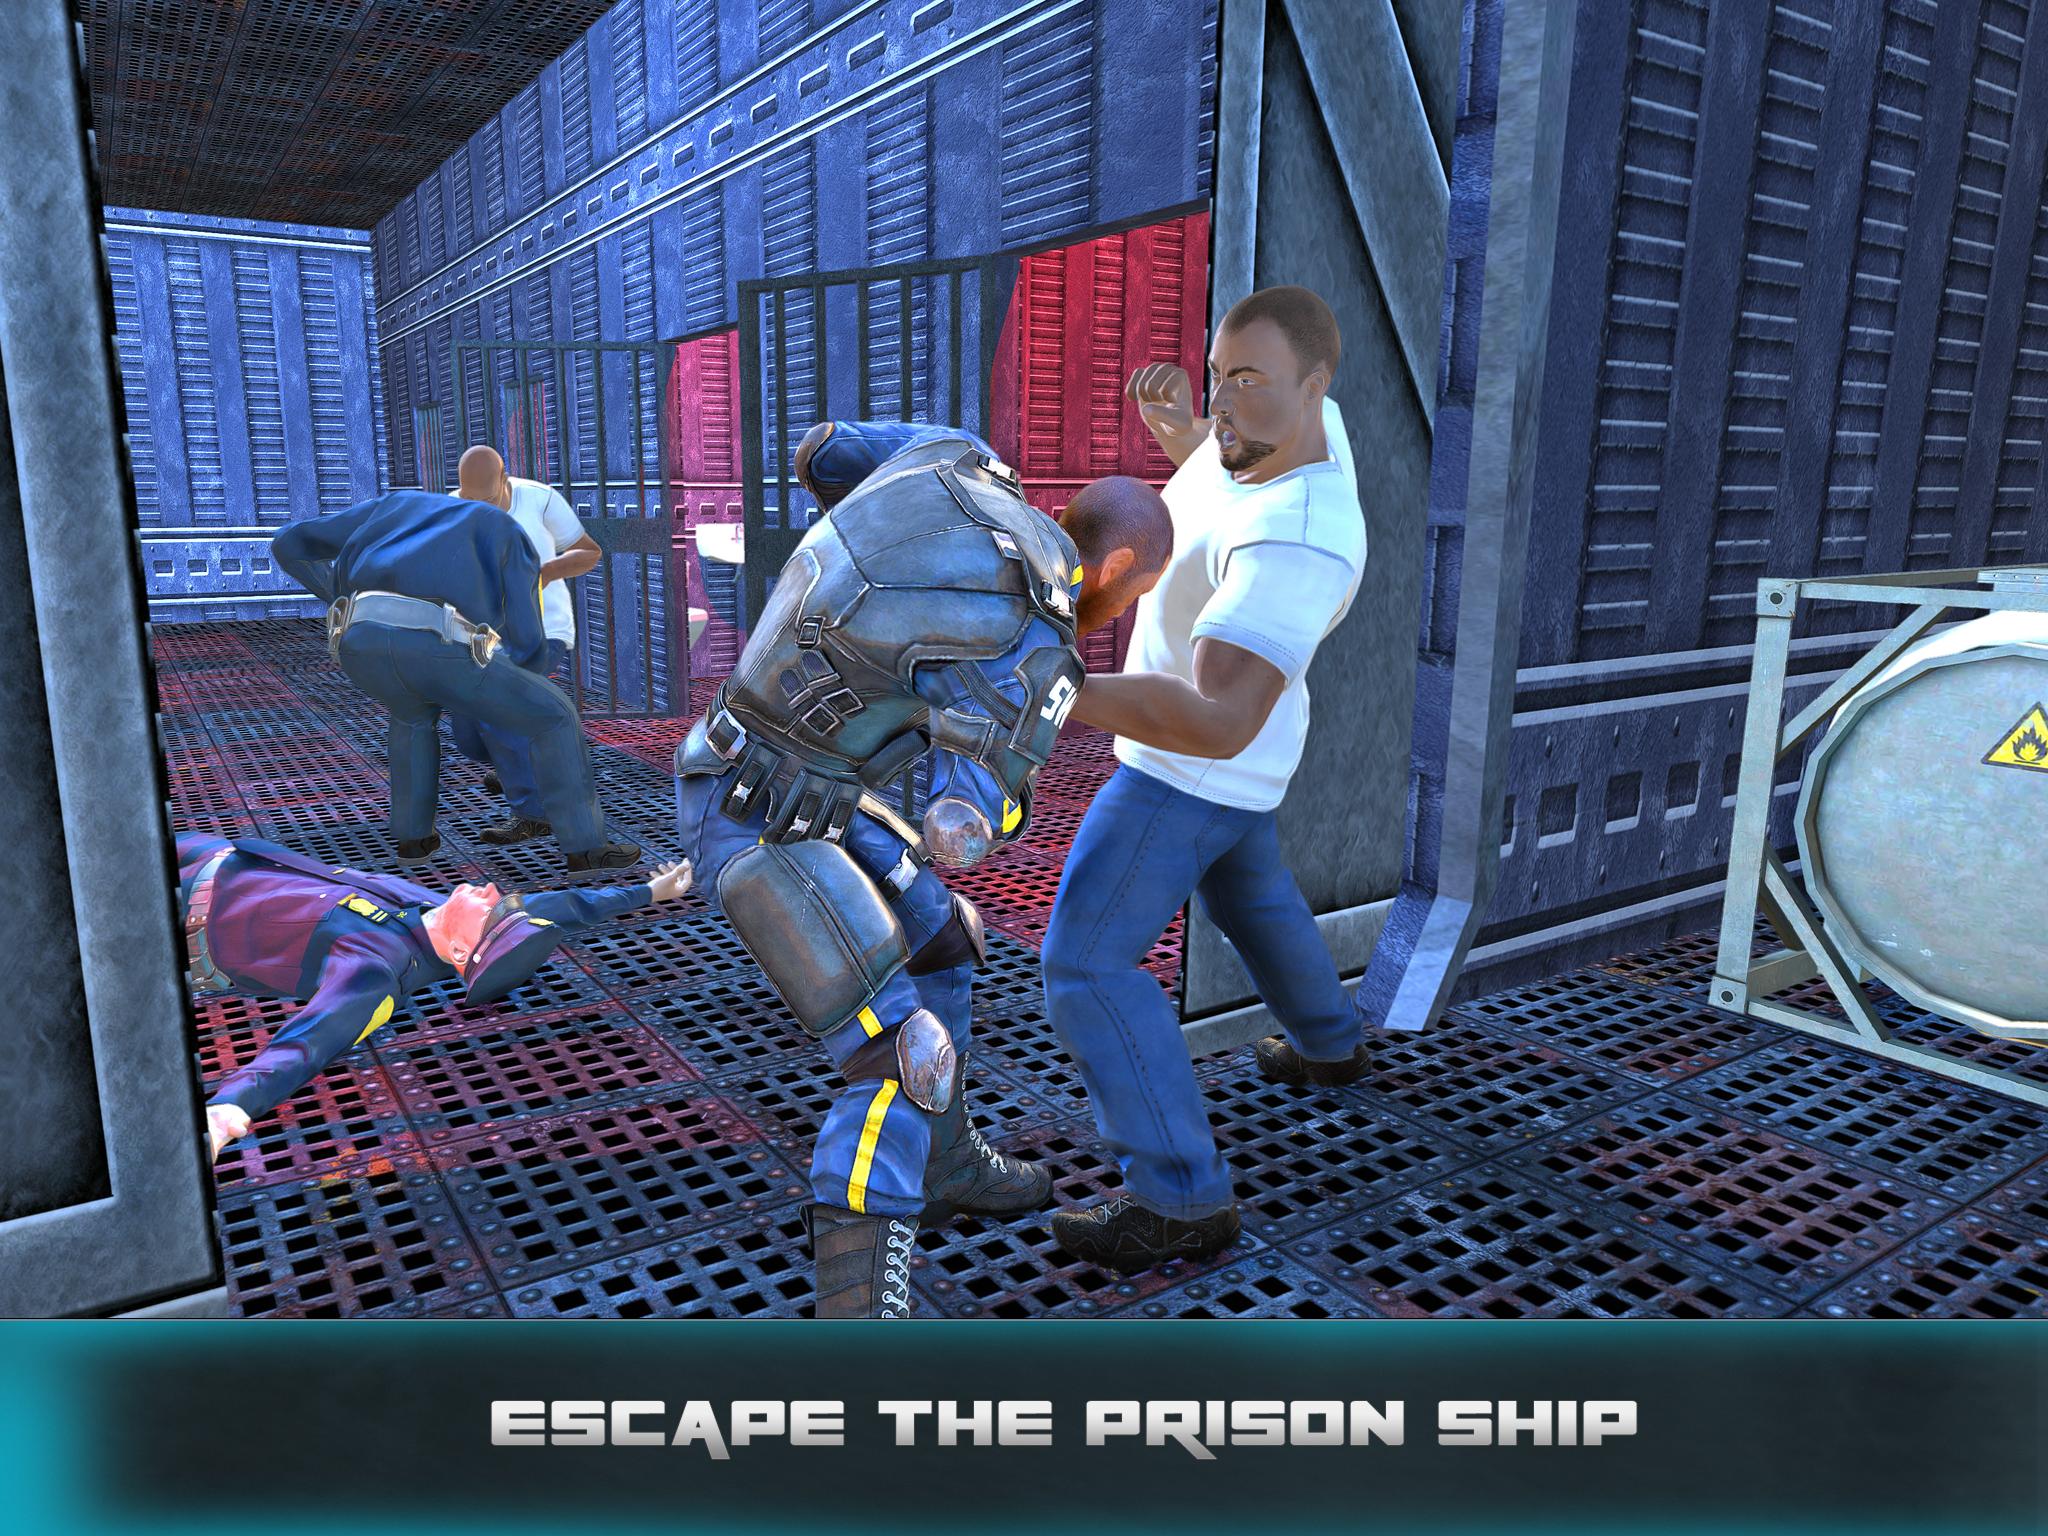 Aircraft Carrier Prison Break For Android Apk Download - roblox prison breaker v1.5